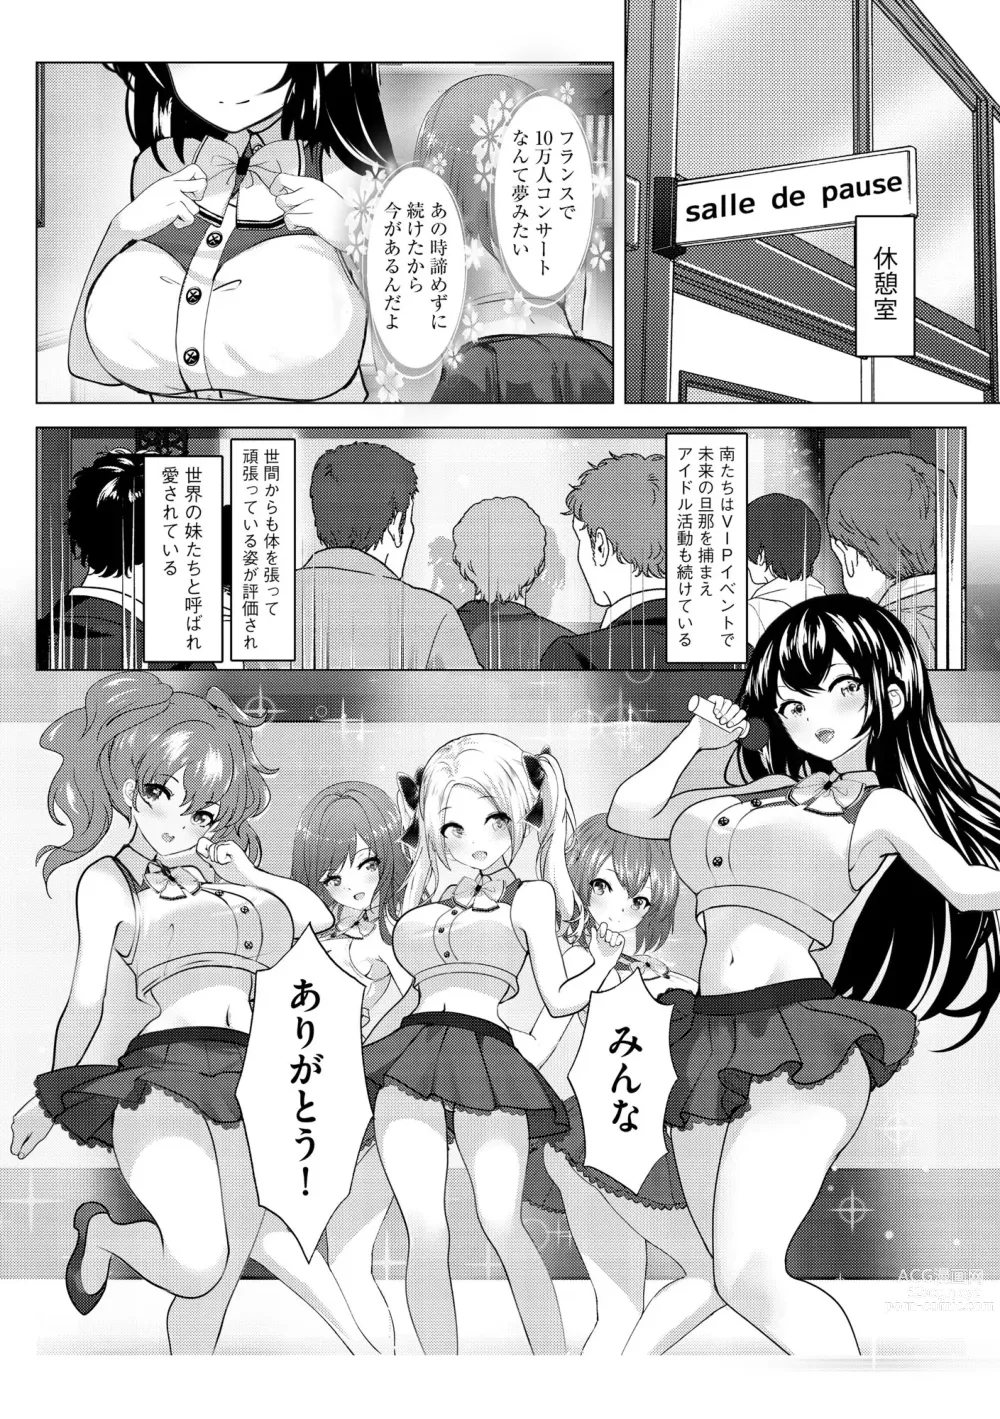 Page 382 of manga Cyberia Plus Vol. 16